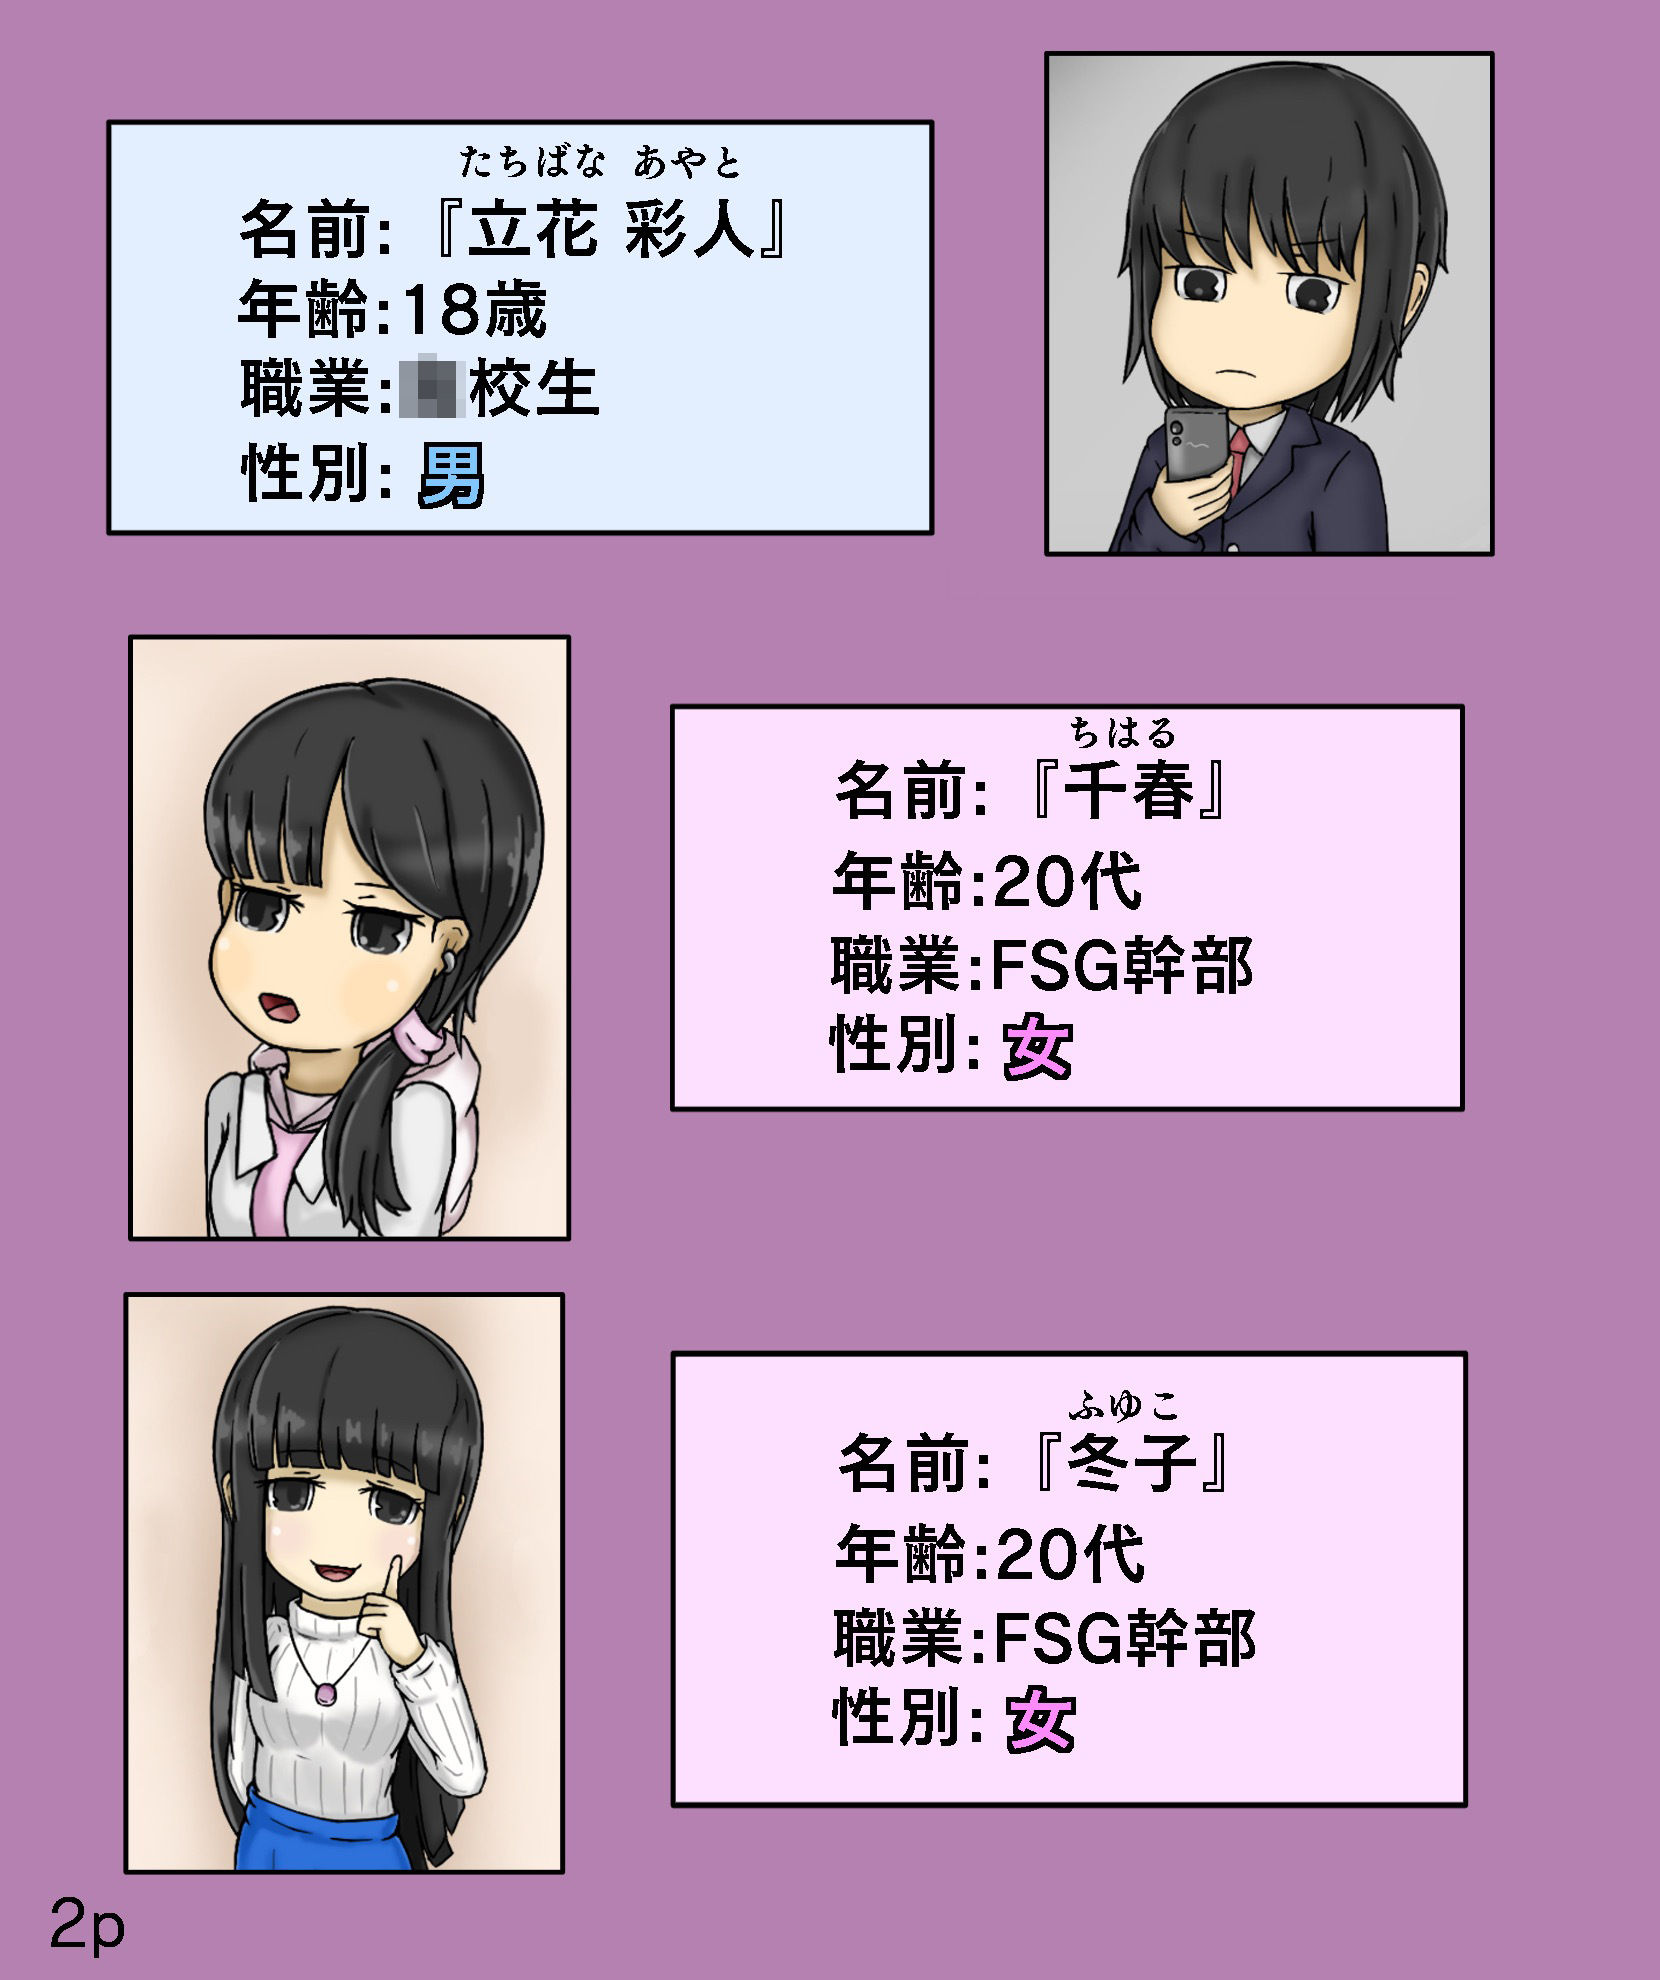 Girls world side FSG 新作旧作セット